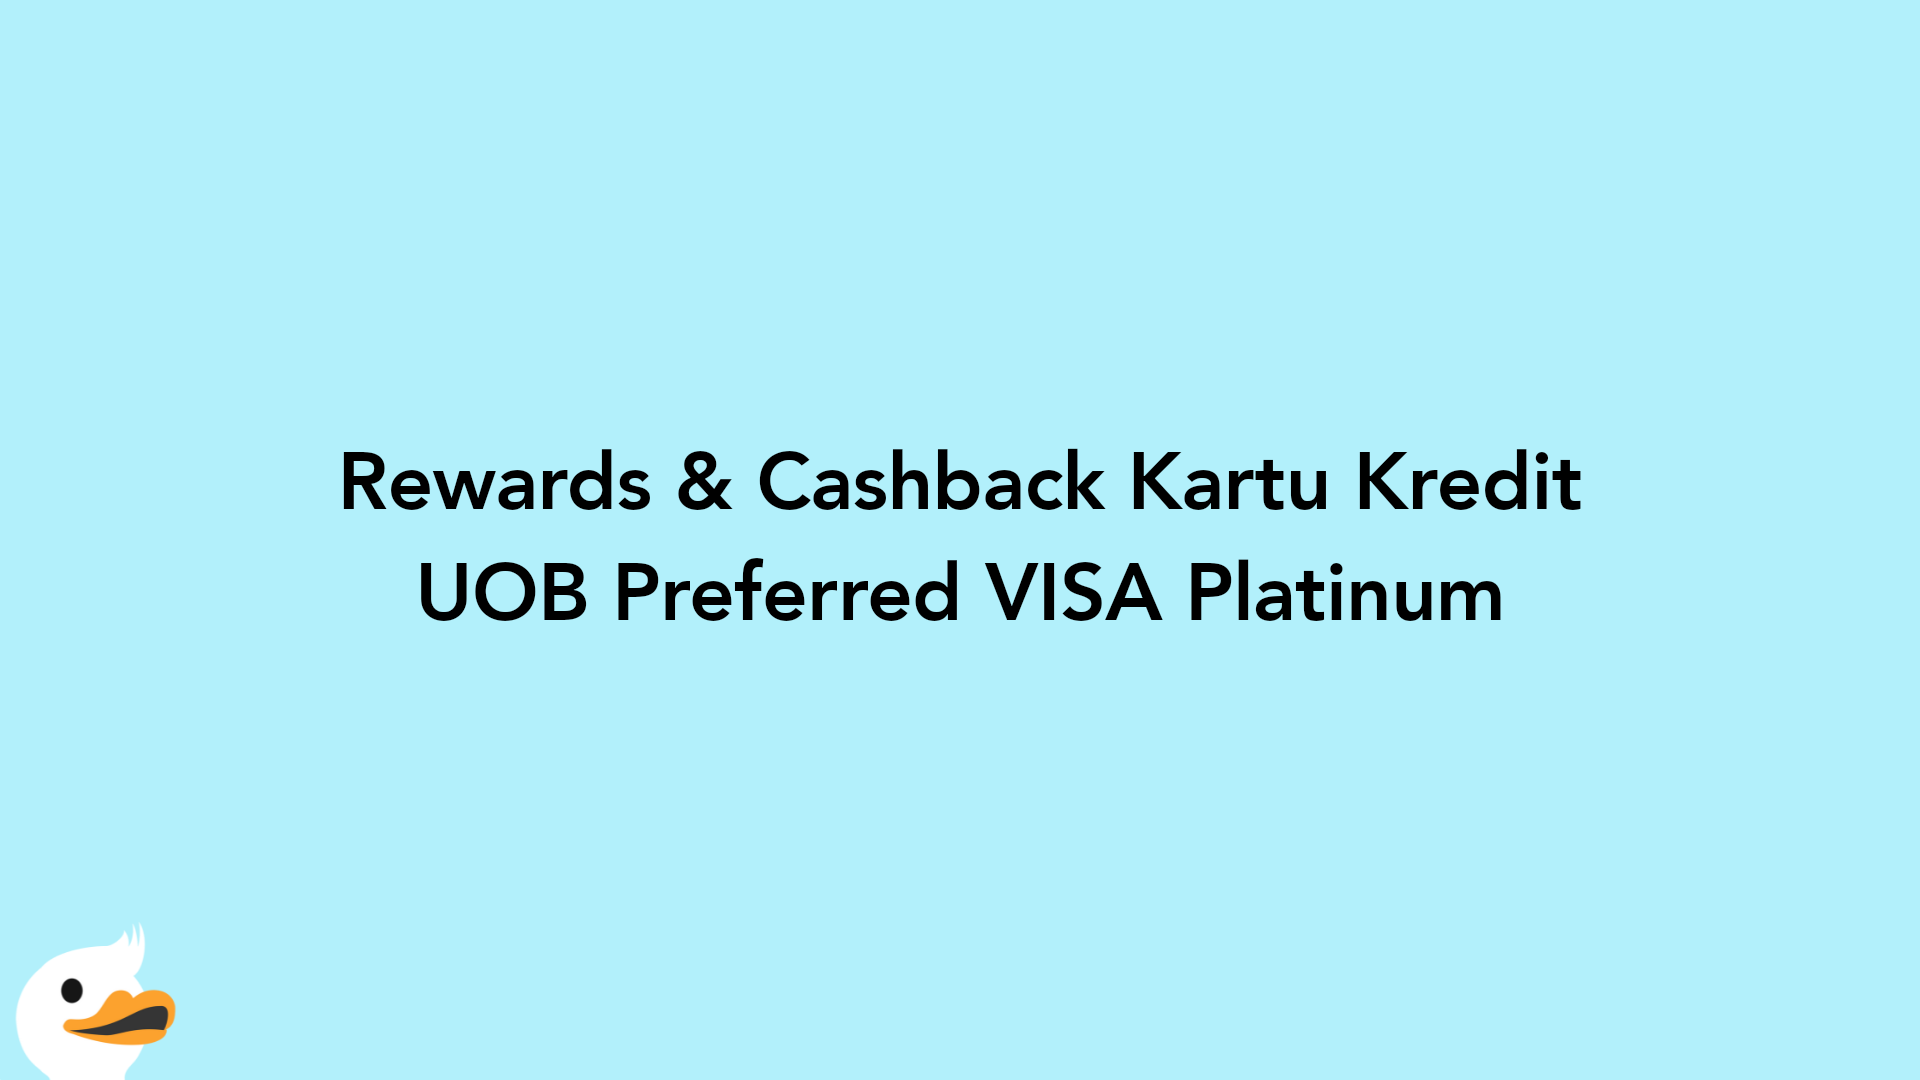 Rewards & Cashback Kartu Kredit UOB Preferred VISA Platinum